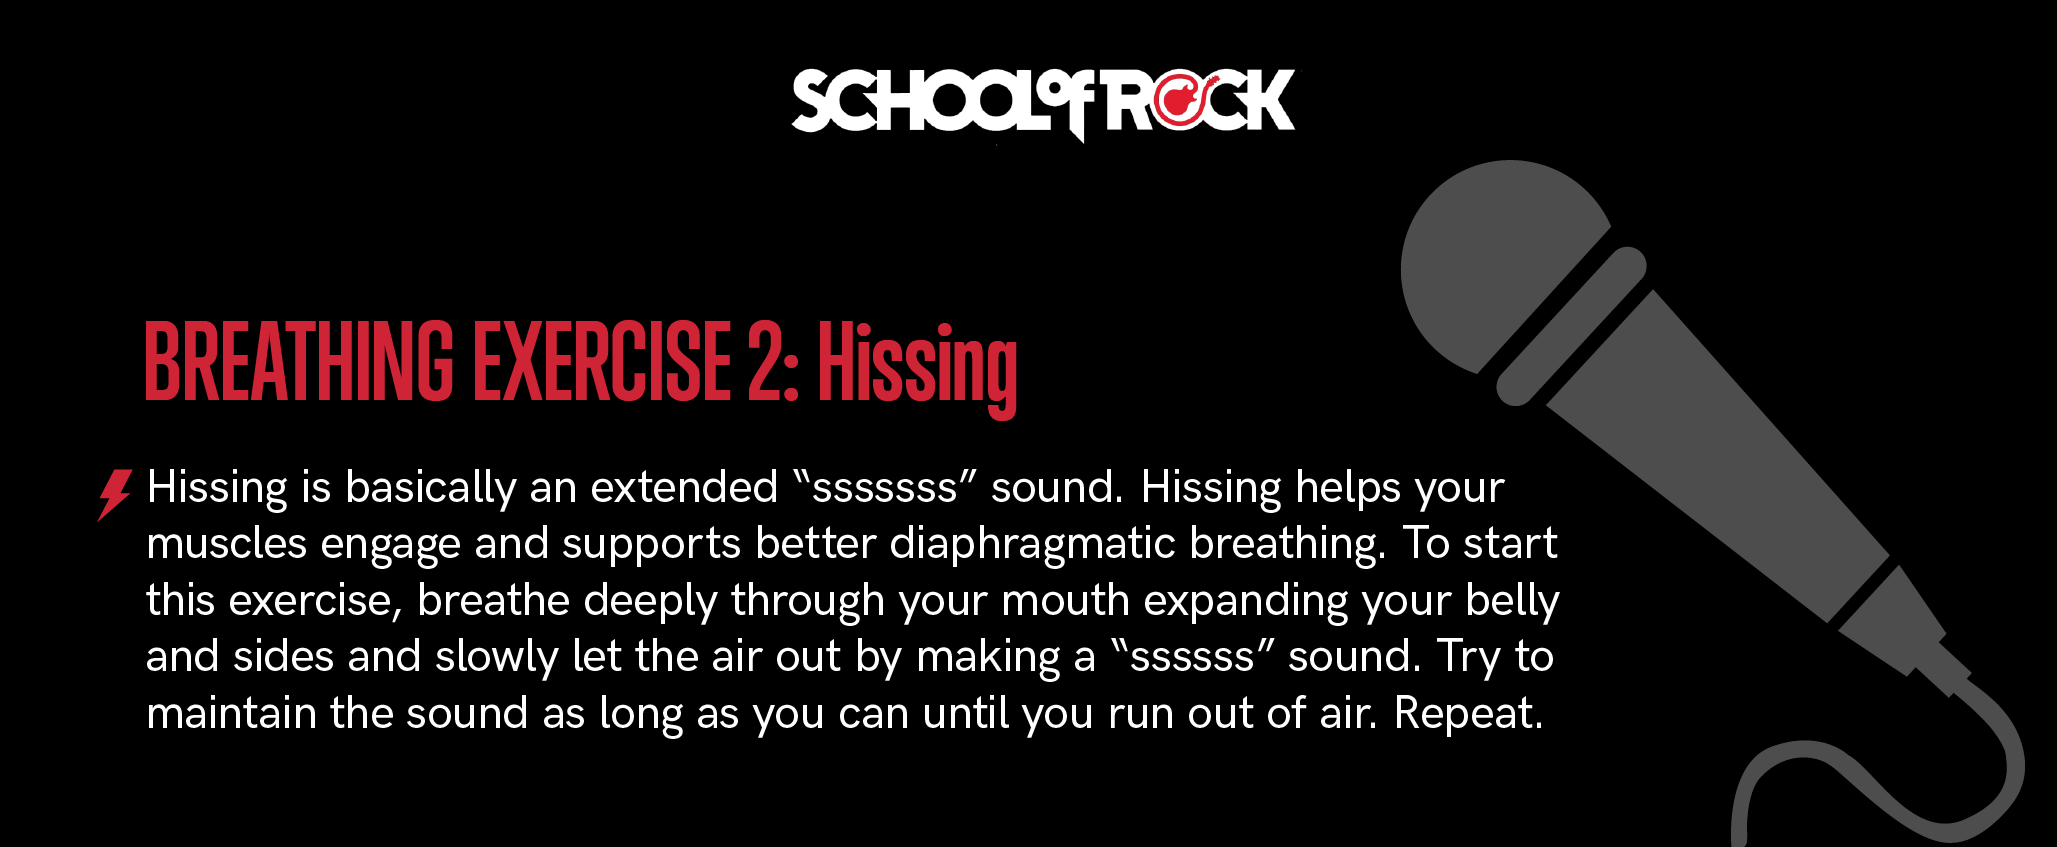 Breathing Exercise 2: Hissing